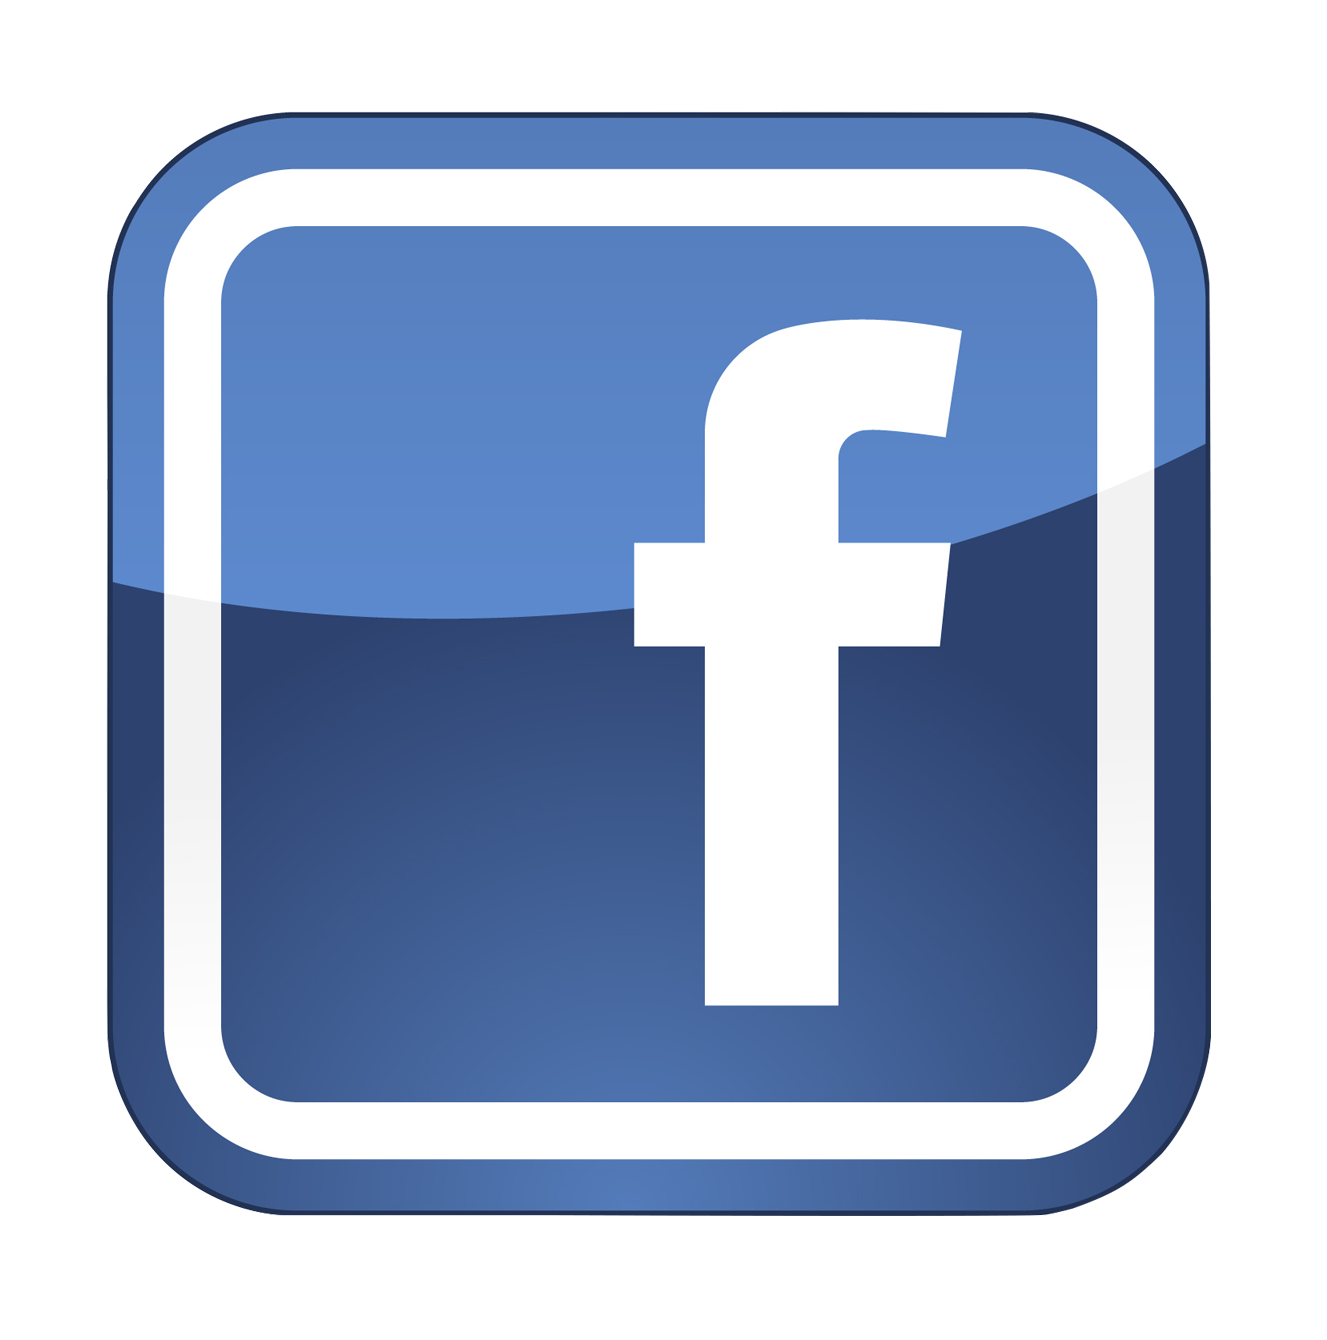 Download Icons Media Fb Computer Facebook Social Hq Png Image Freepngimg